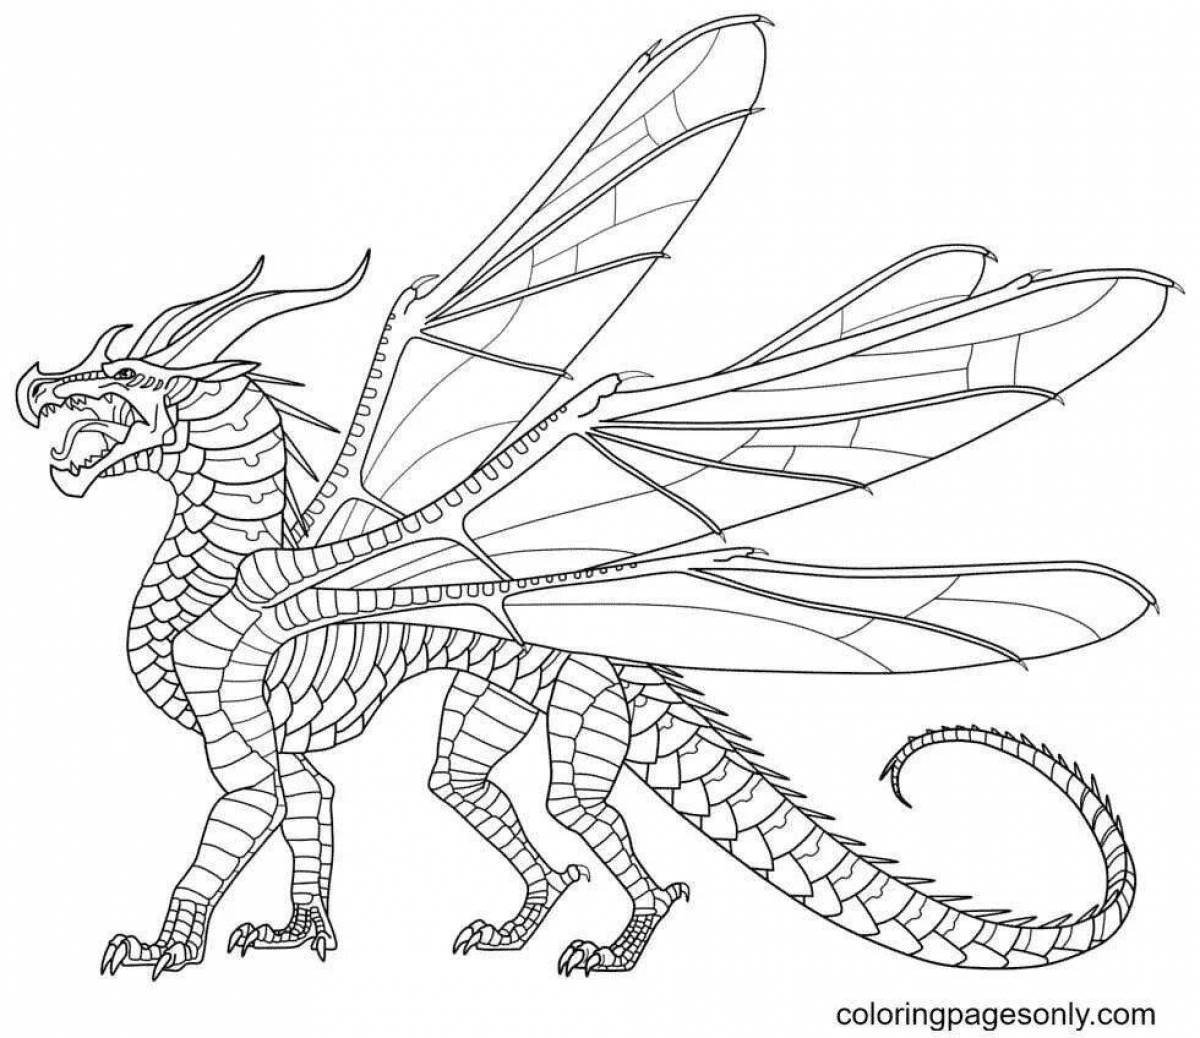 Winged dragon #2